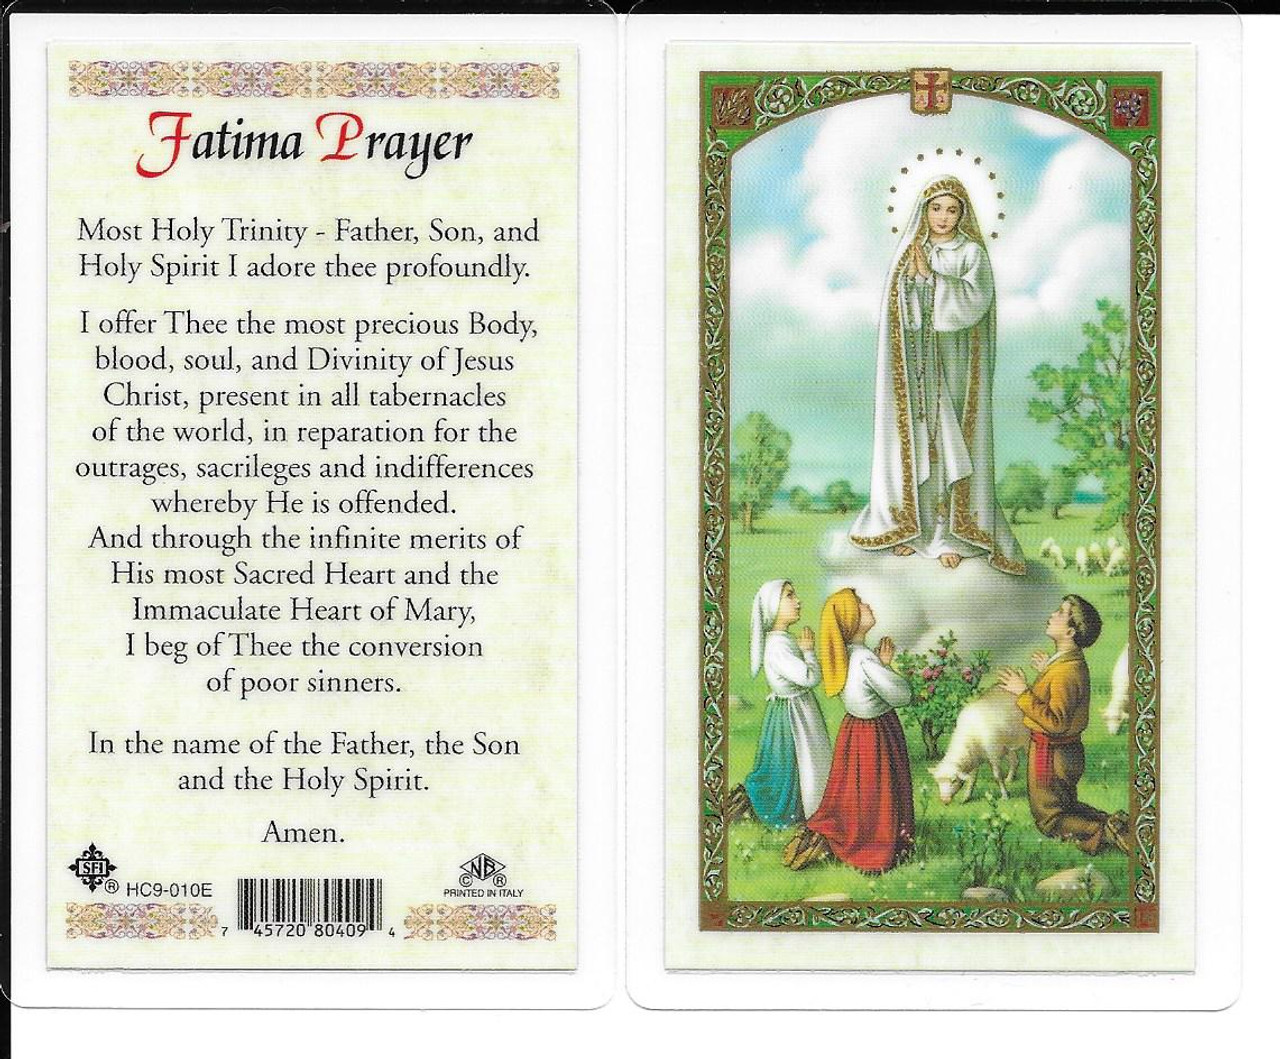 Laminated Our Lady Prayer Card “Fatima Prayer”.